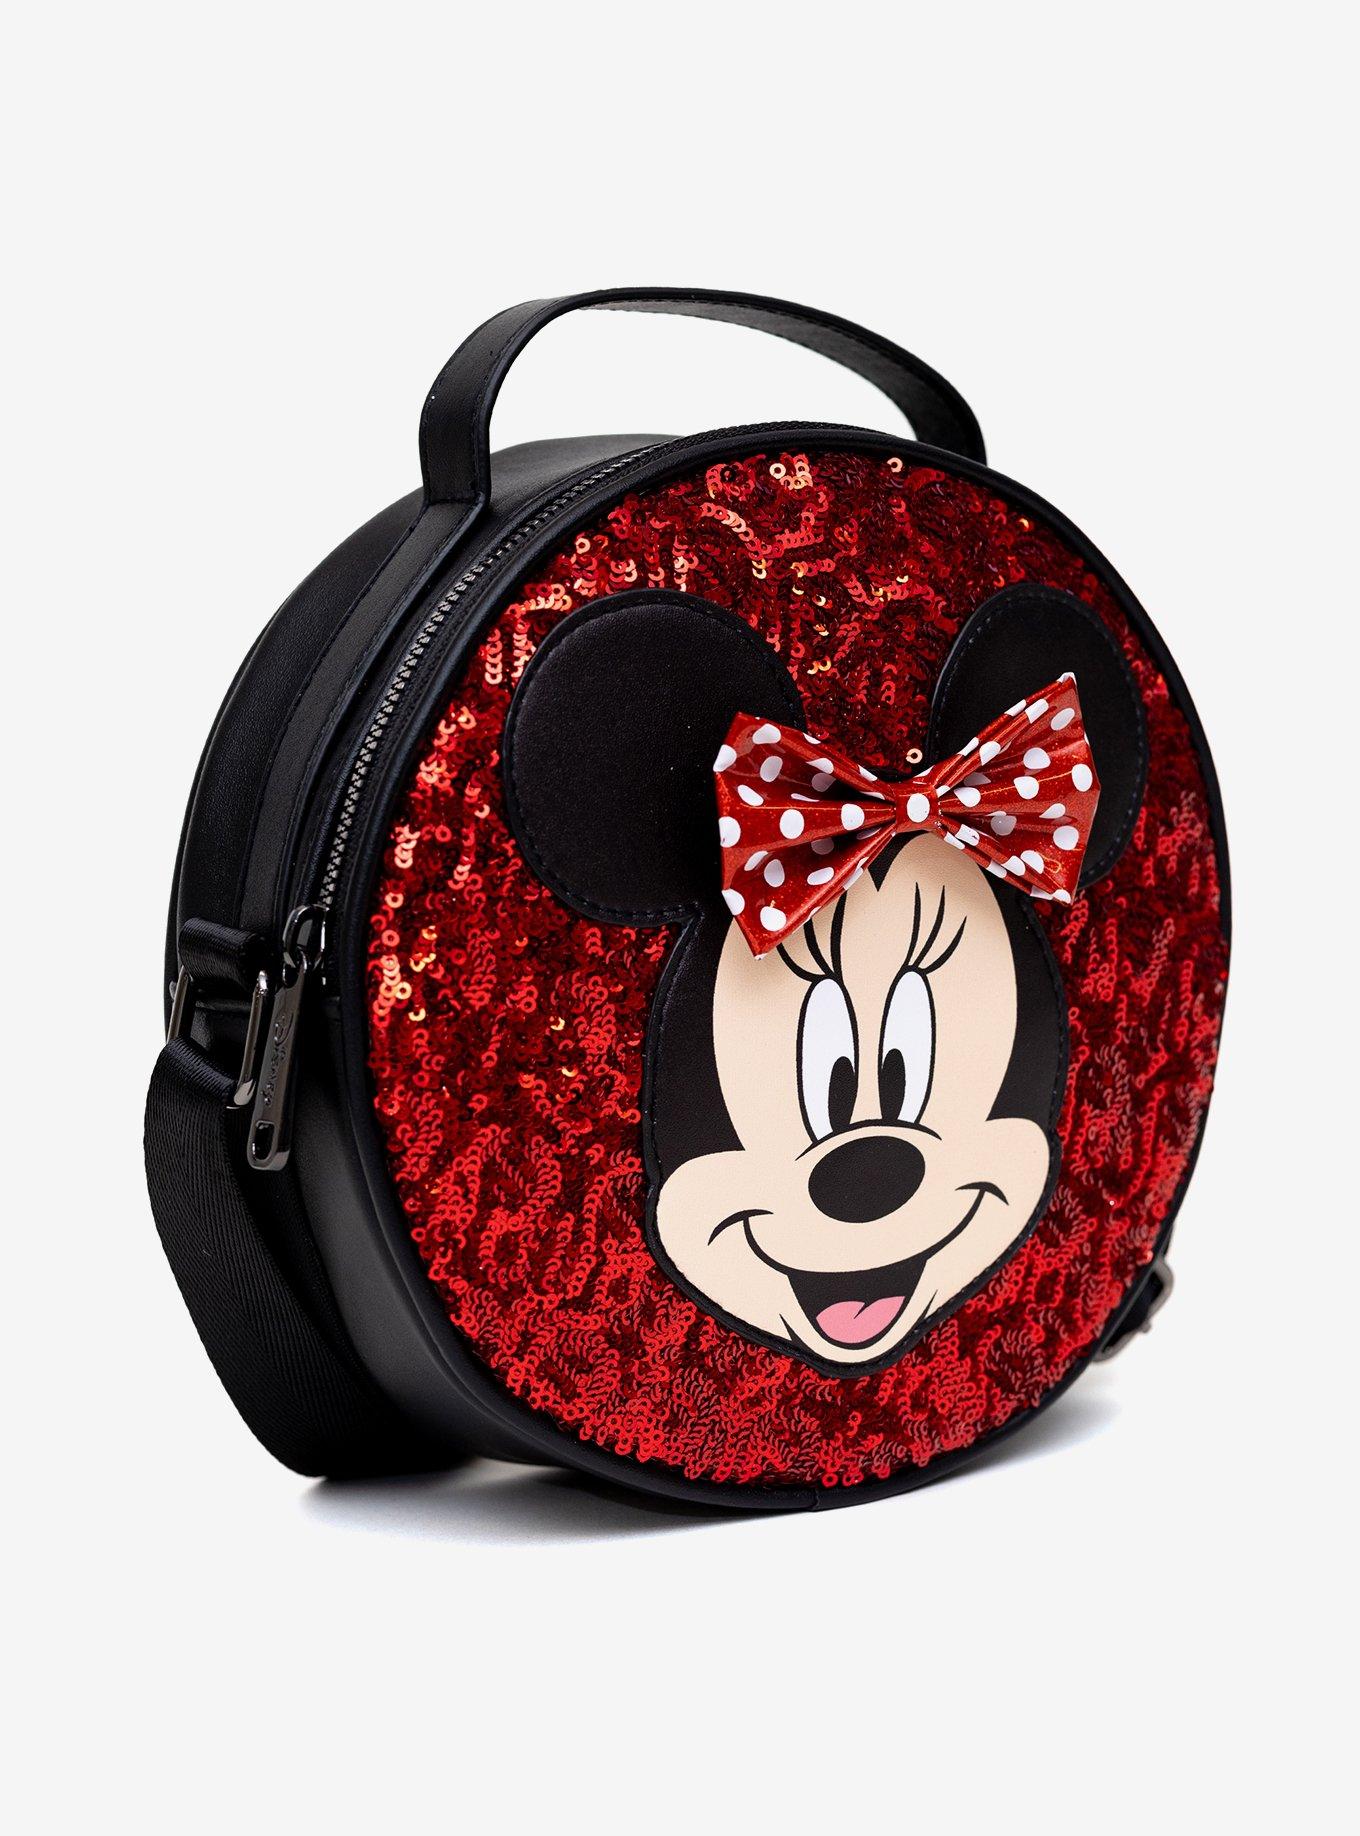 Disney Minnie Mouse Bow Applique Red Sequin Crossbody Bag